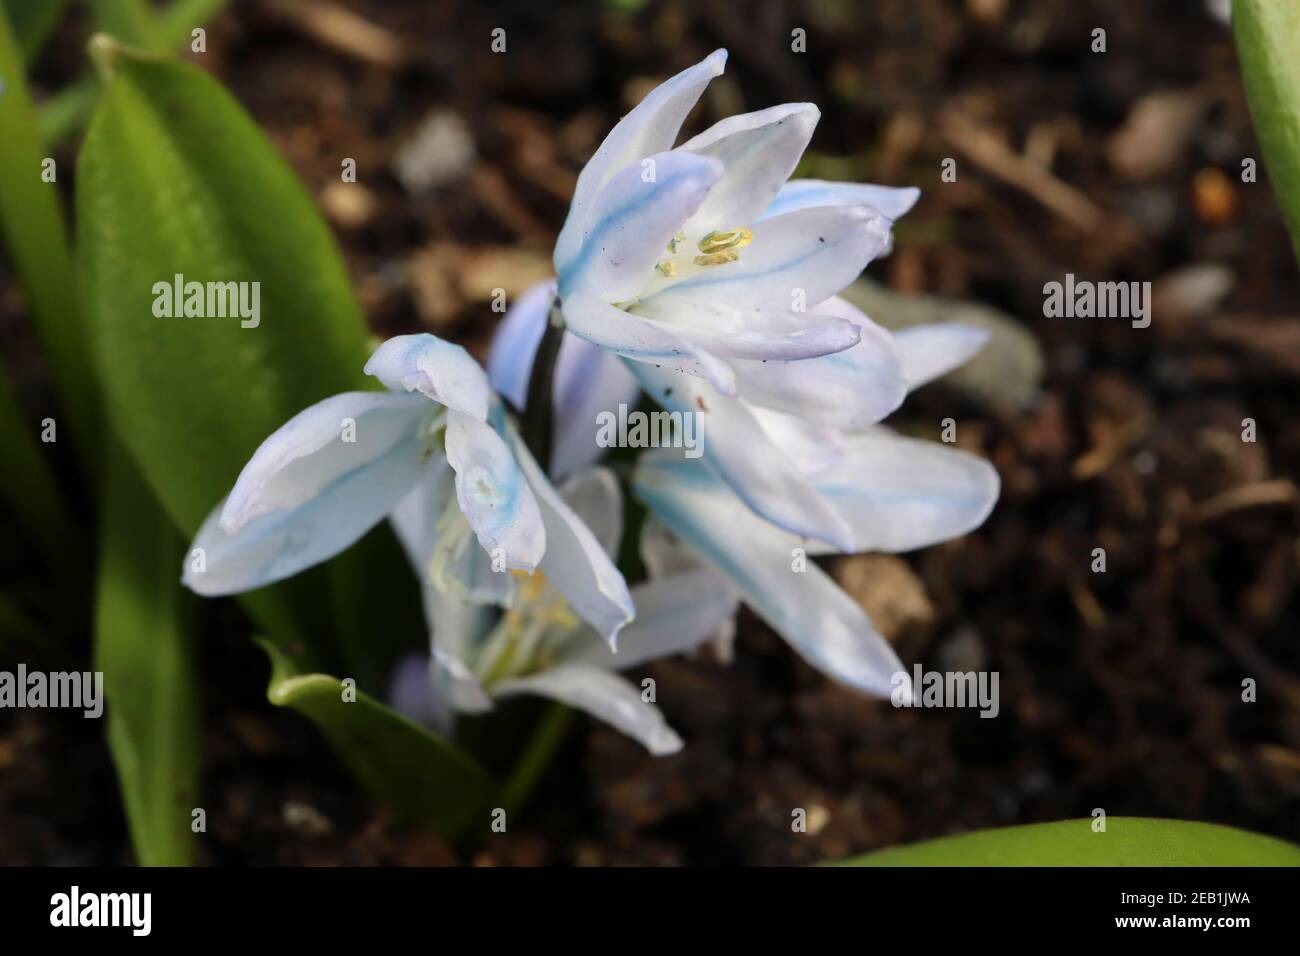 Scilla mischtschenkoana «Tubergeniana» Misczenko squill Tubergeniana – fleurs blanches en forme de cloche avec nervures bleues, février, Angleterre, Royaume-Uni Banque D'Images